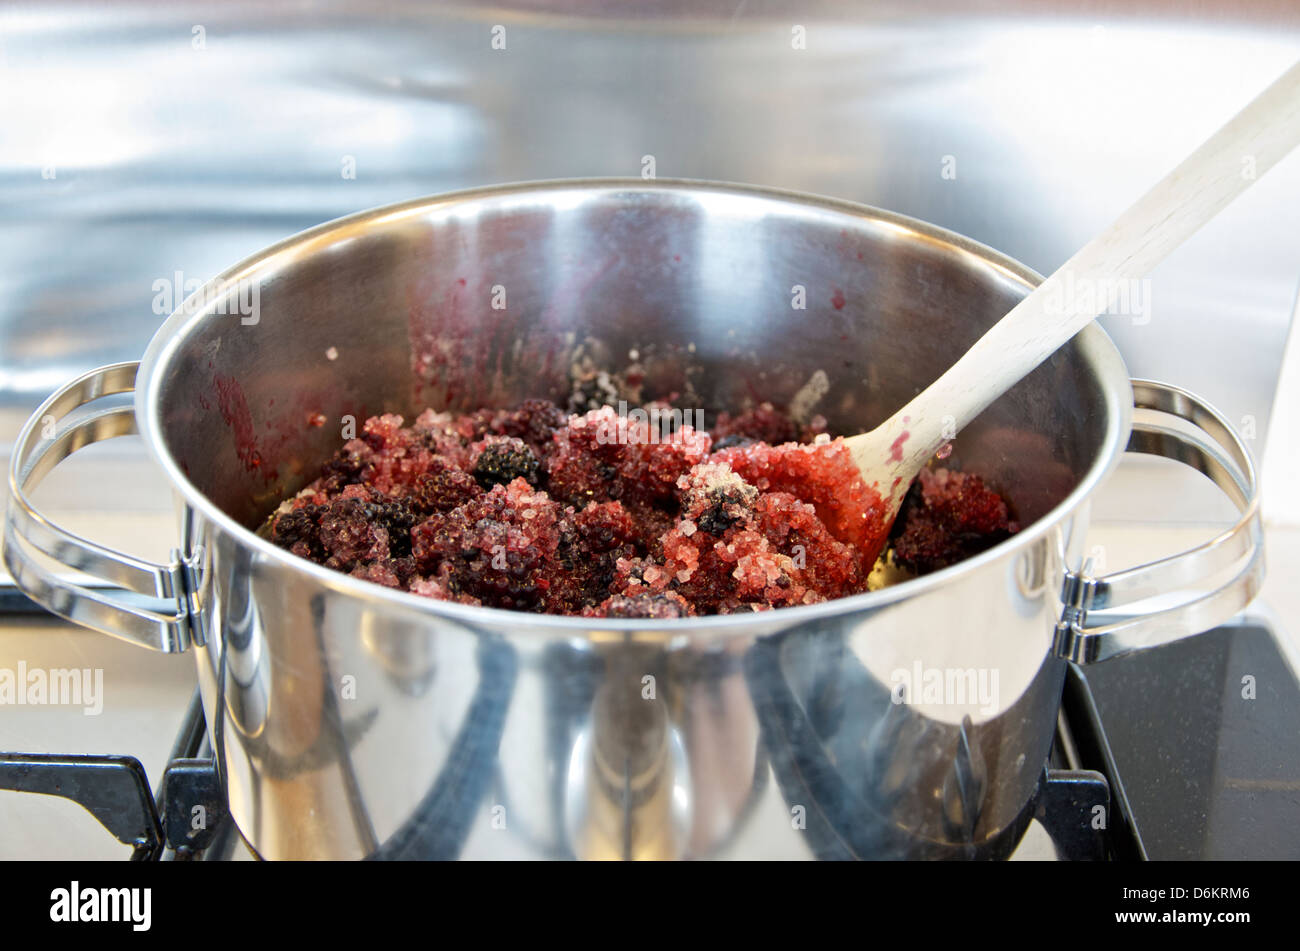 Making Jam: Step 7/10, stirring preserving sugar into stainless steel pan of blackberries and water Stock Photo